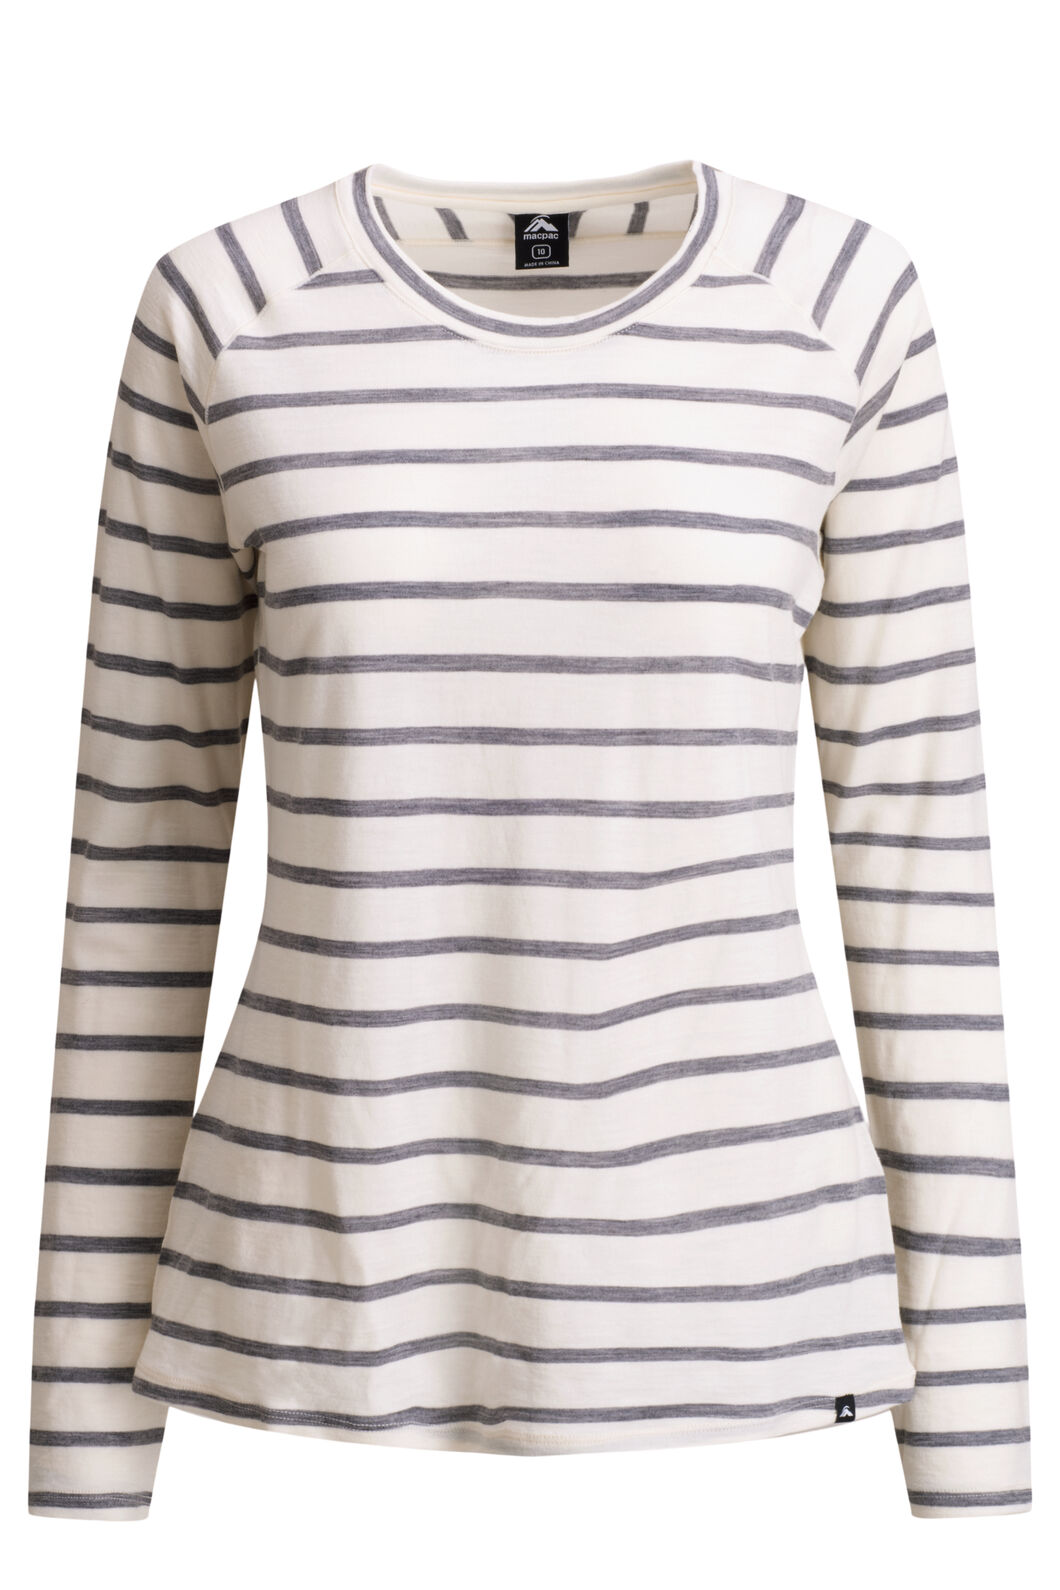 Macpac Women's Ella 180 Merino Long Sleeve T-Shirt, Cream/ Grey Marle, hi-res